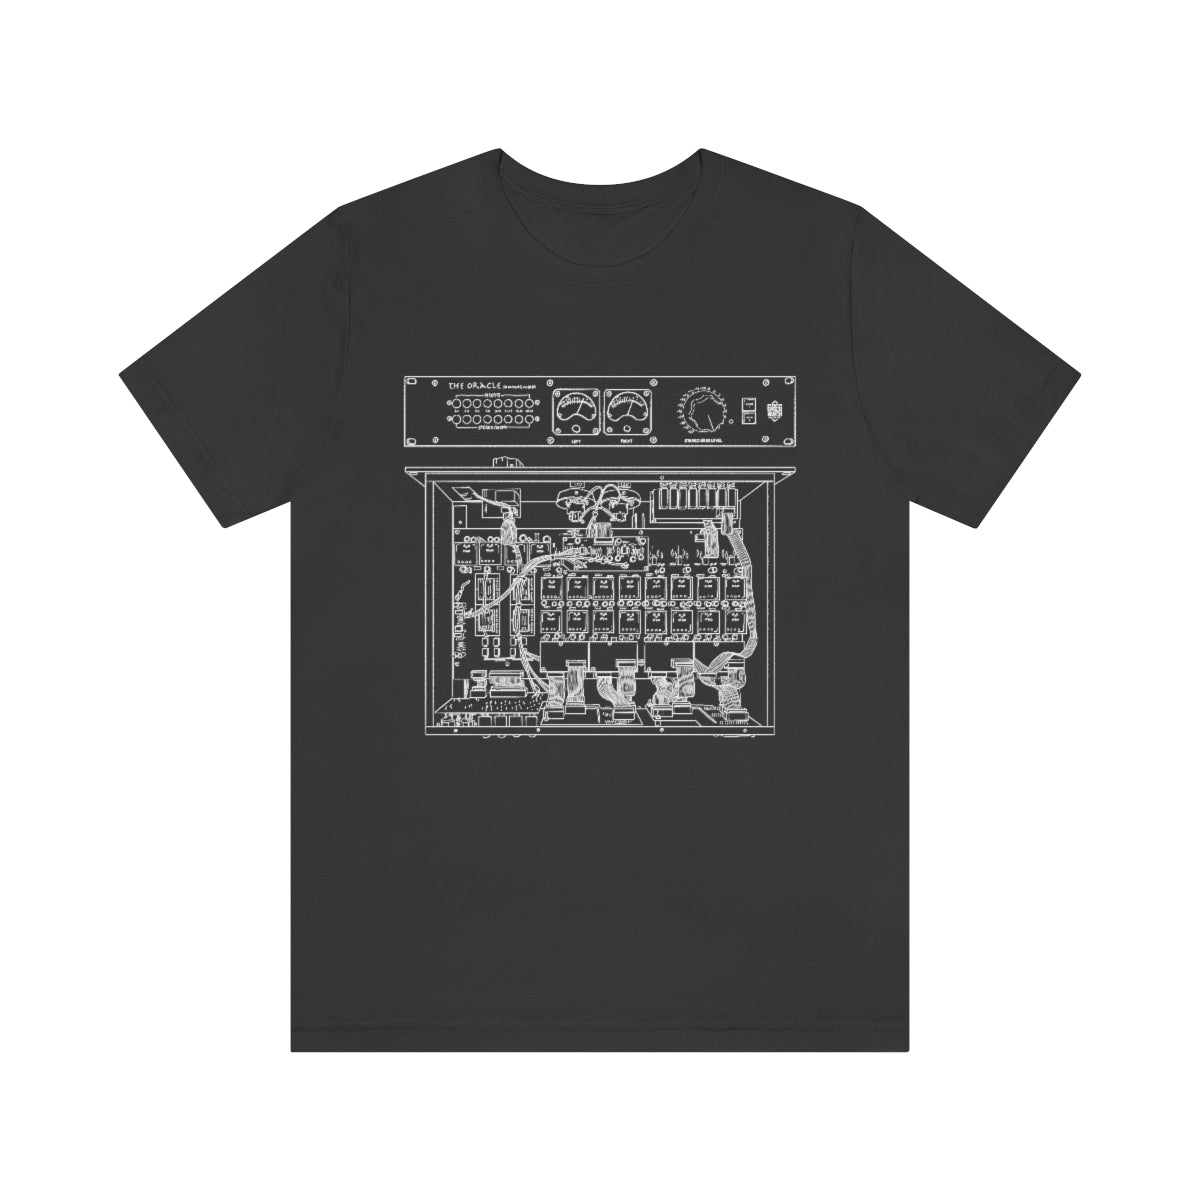 The Oracle Summing Mixer Blueprint T-Shirt Dark Grey